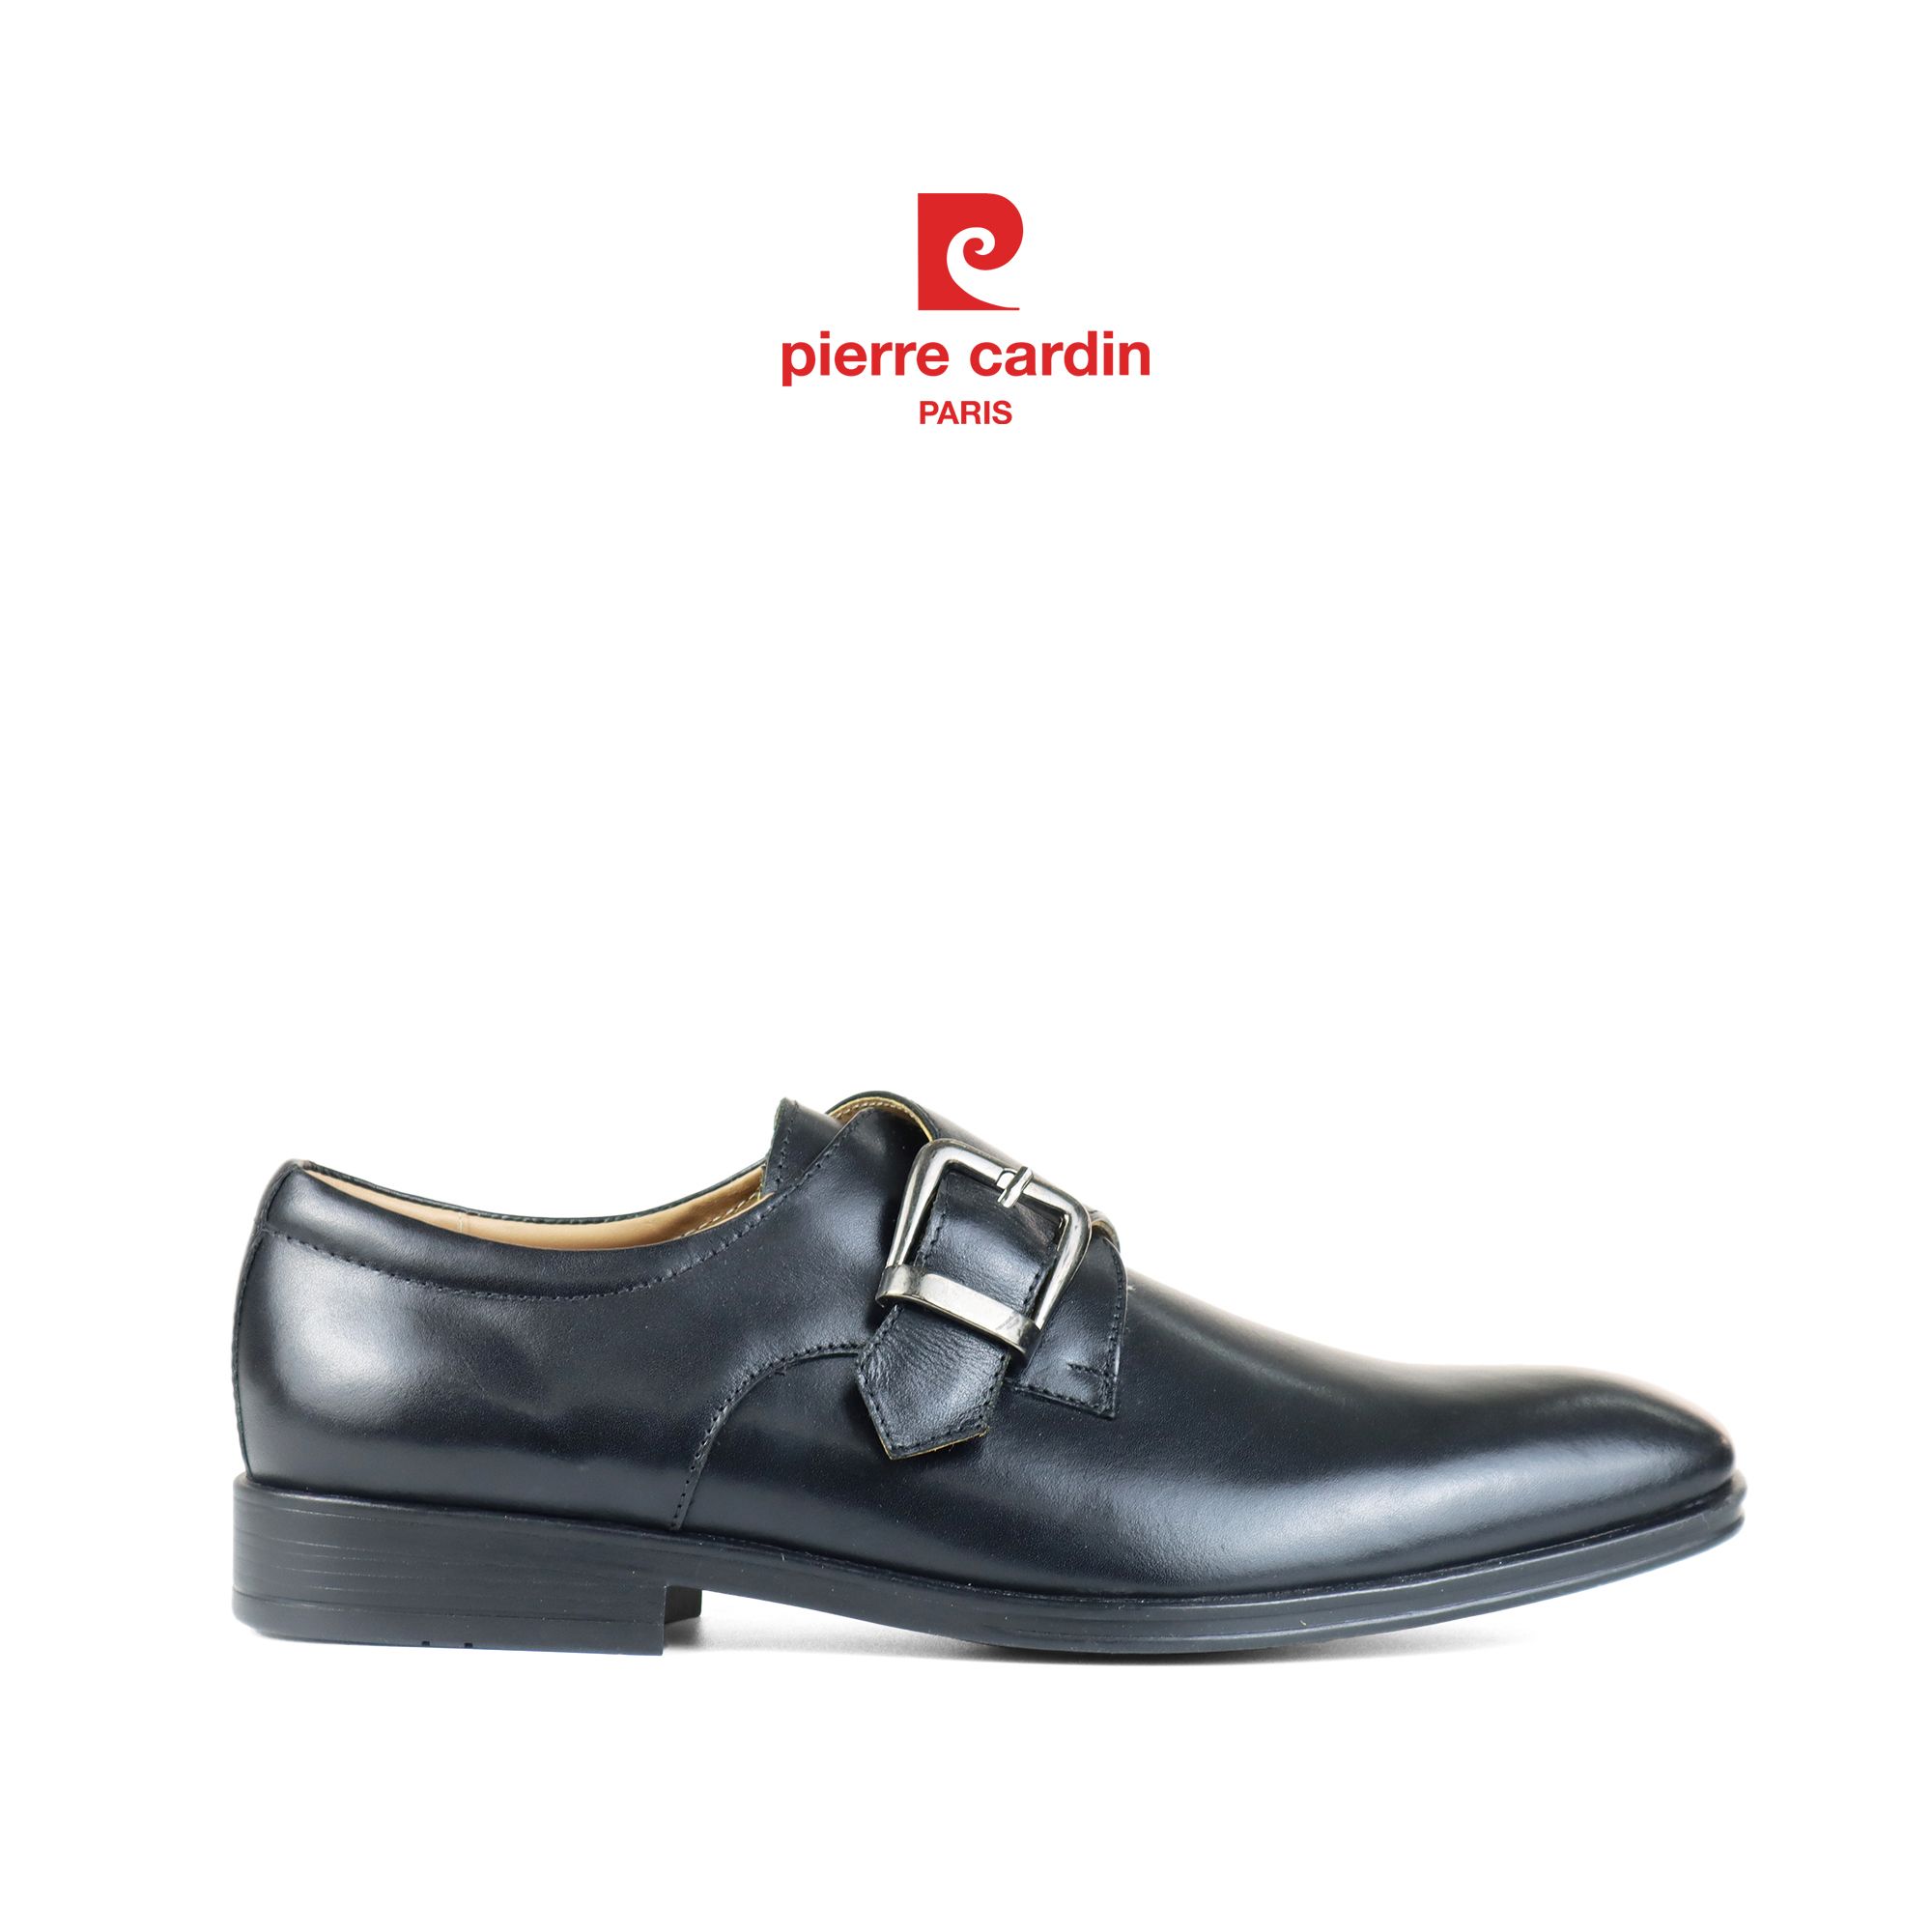 The Merx Shoes #778 Pierre Cardin có chất liệu da bò nappa